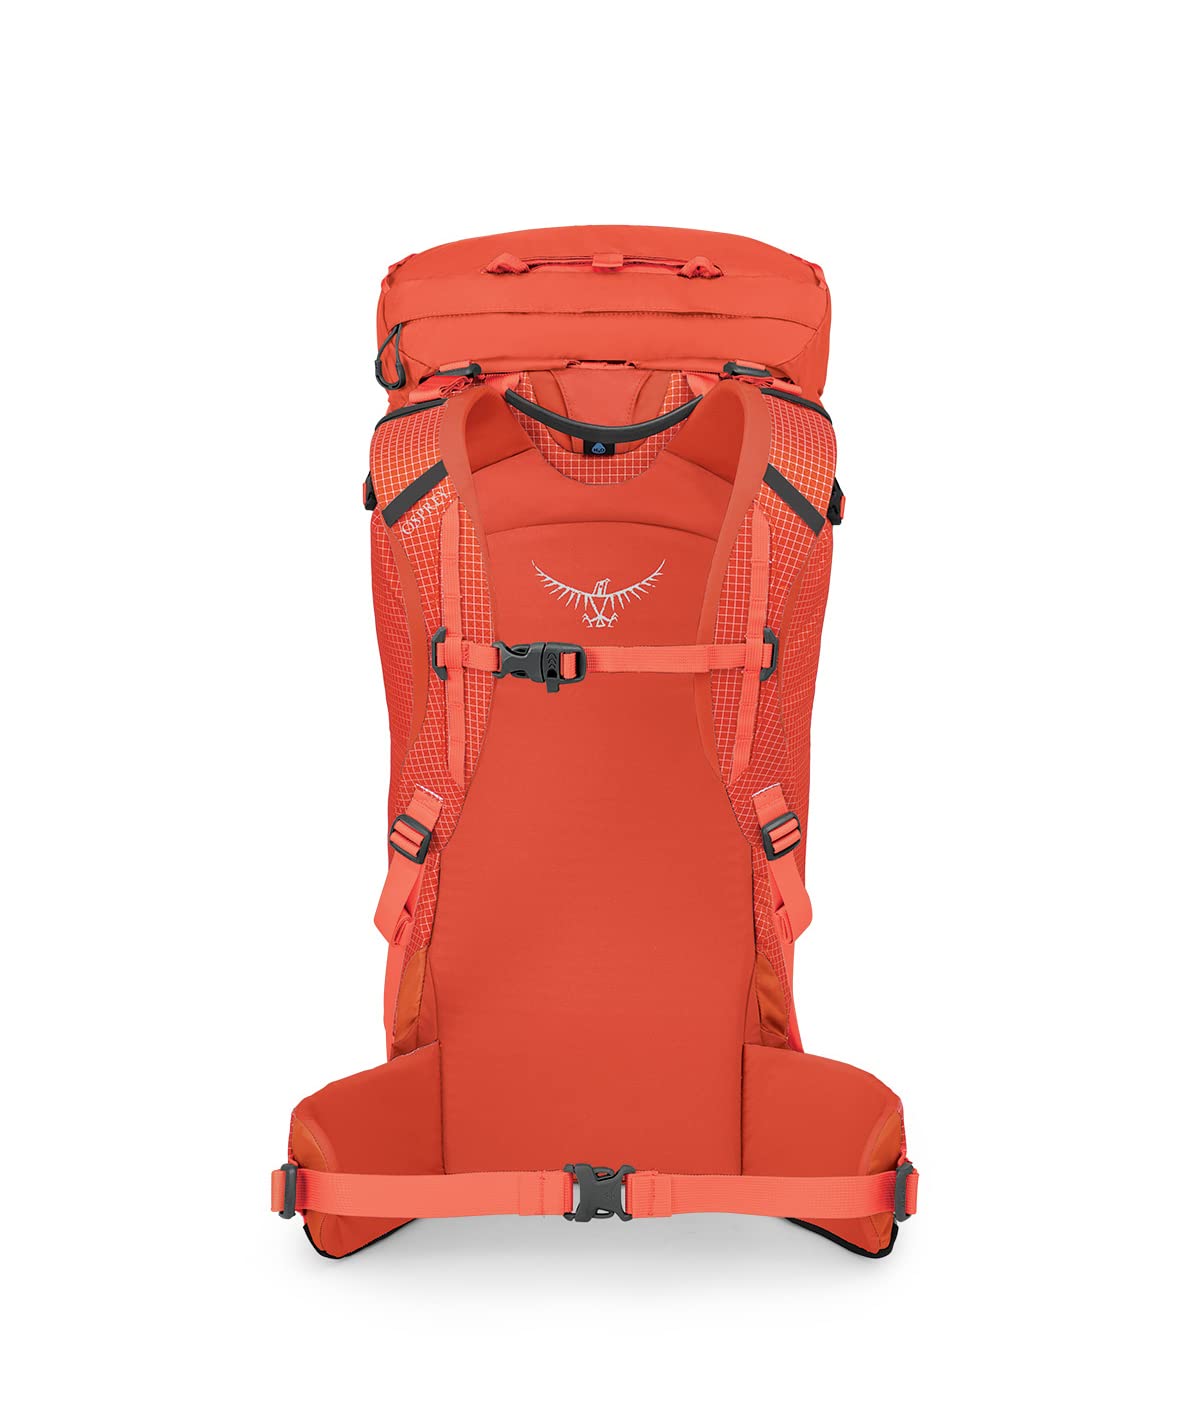 Osprey Mutant 38L Climbing and Mountaineering Unisex Backpack, Mars Orange, S/M